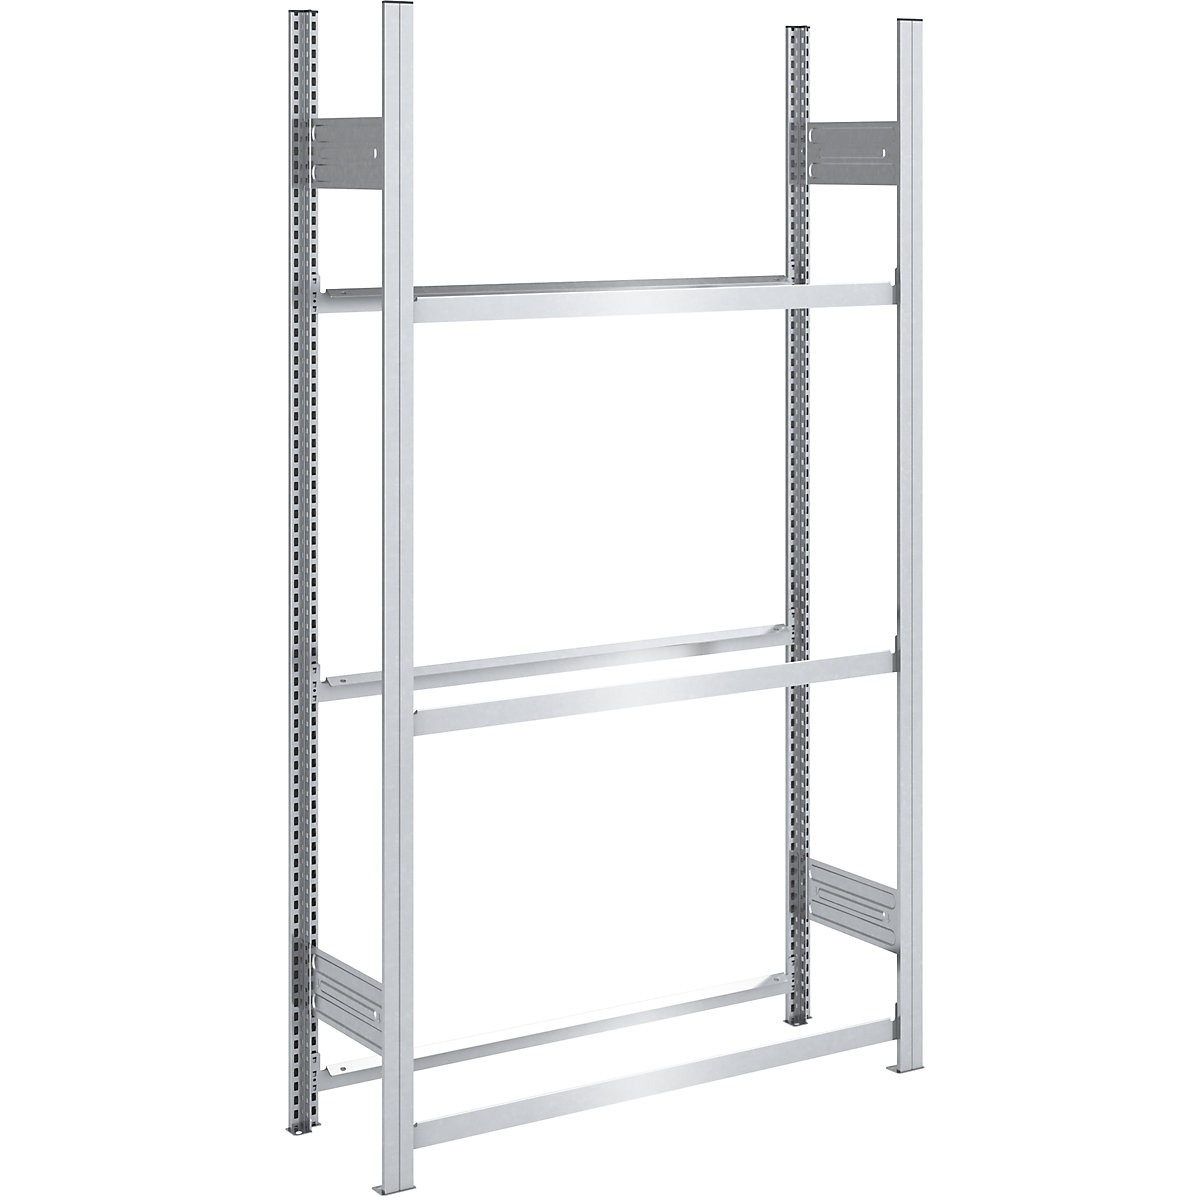 Tyre shelf unit – hofe, shelf height 2000 mm, standard shelf unit, WxD 1060 x 435 mm